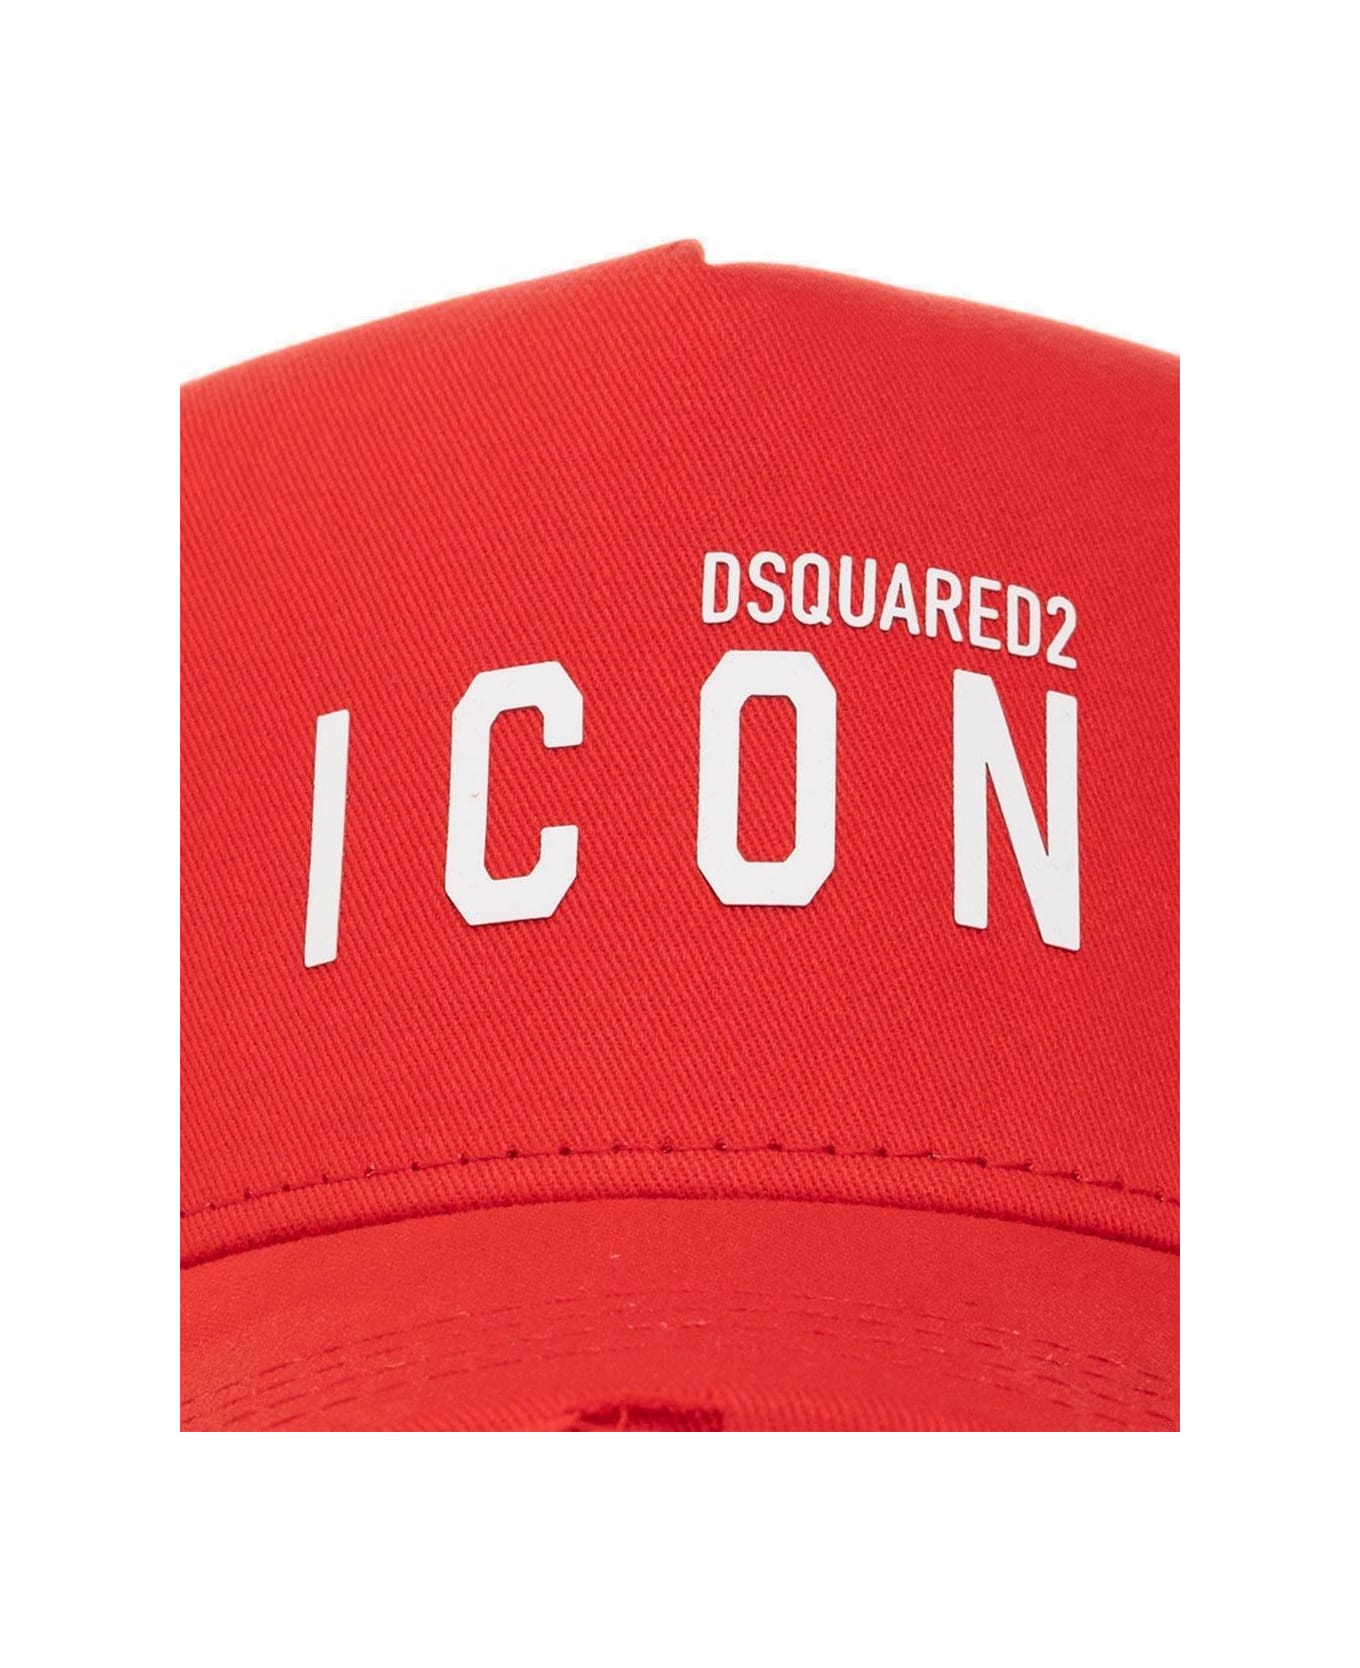 Dsquared2 Logo Printed Curved Peak Cap - Red